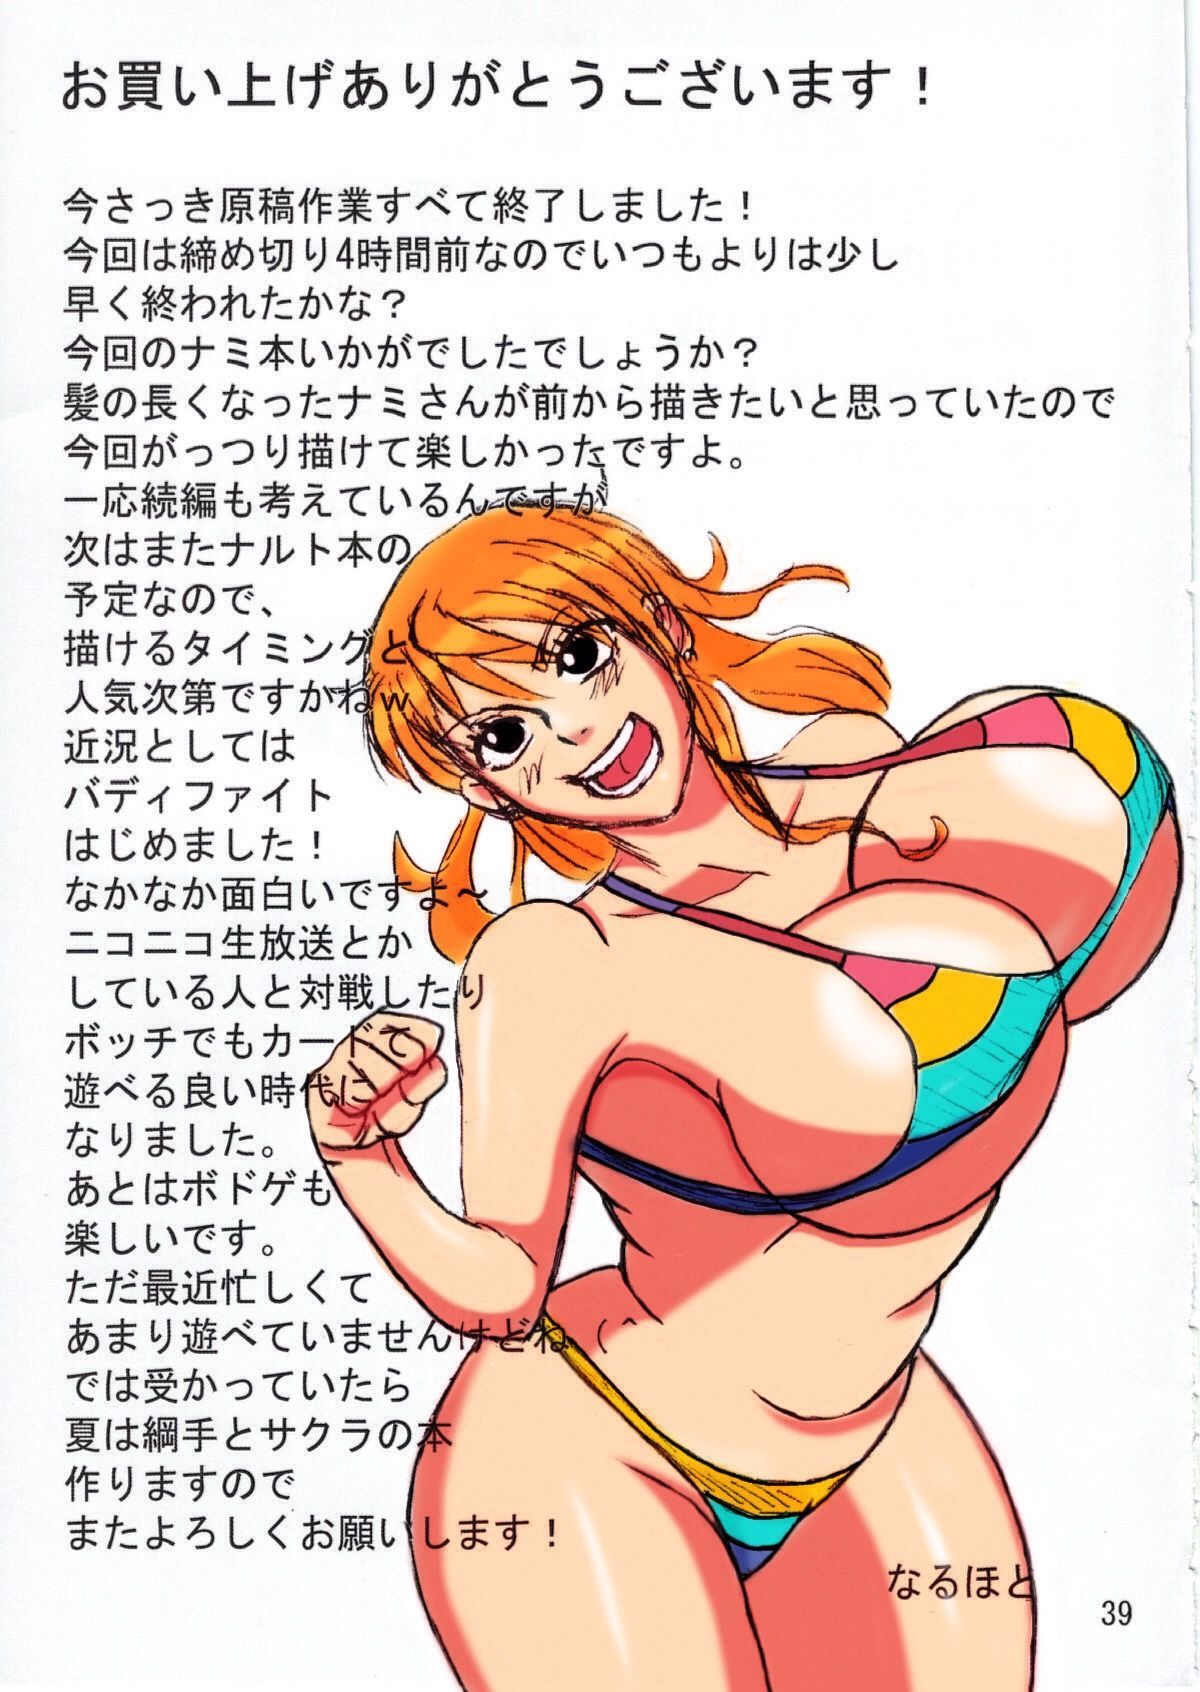 (COMIC1â˜†8) Naruho-dou (Naruhodo) Nami SAGA (One Piece) {} Colorized - part 2